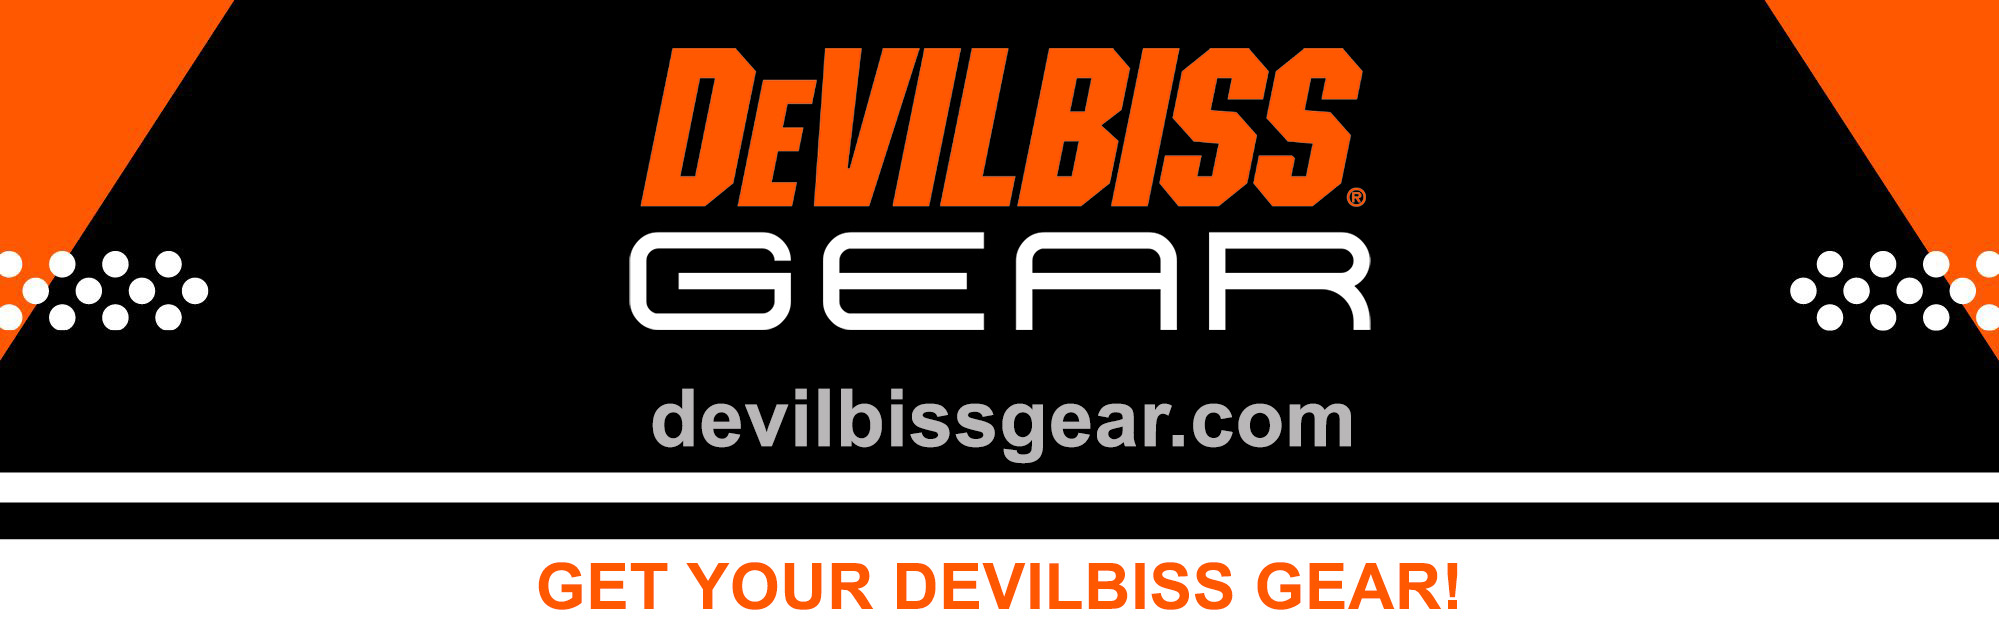 Get Your Devilbiss Gear